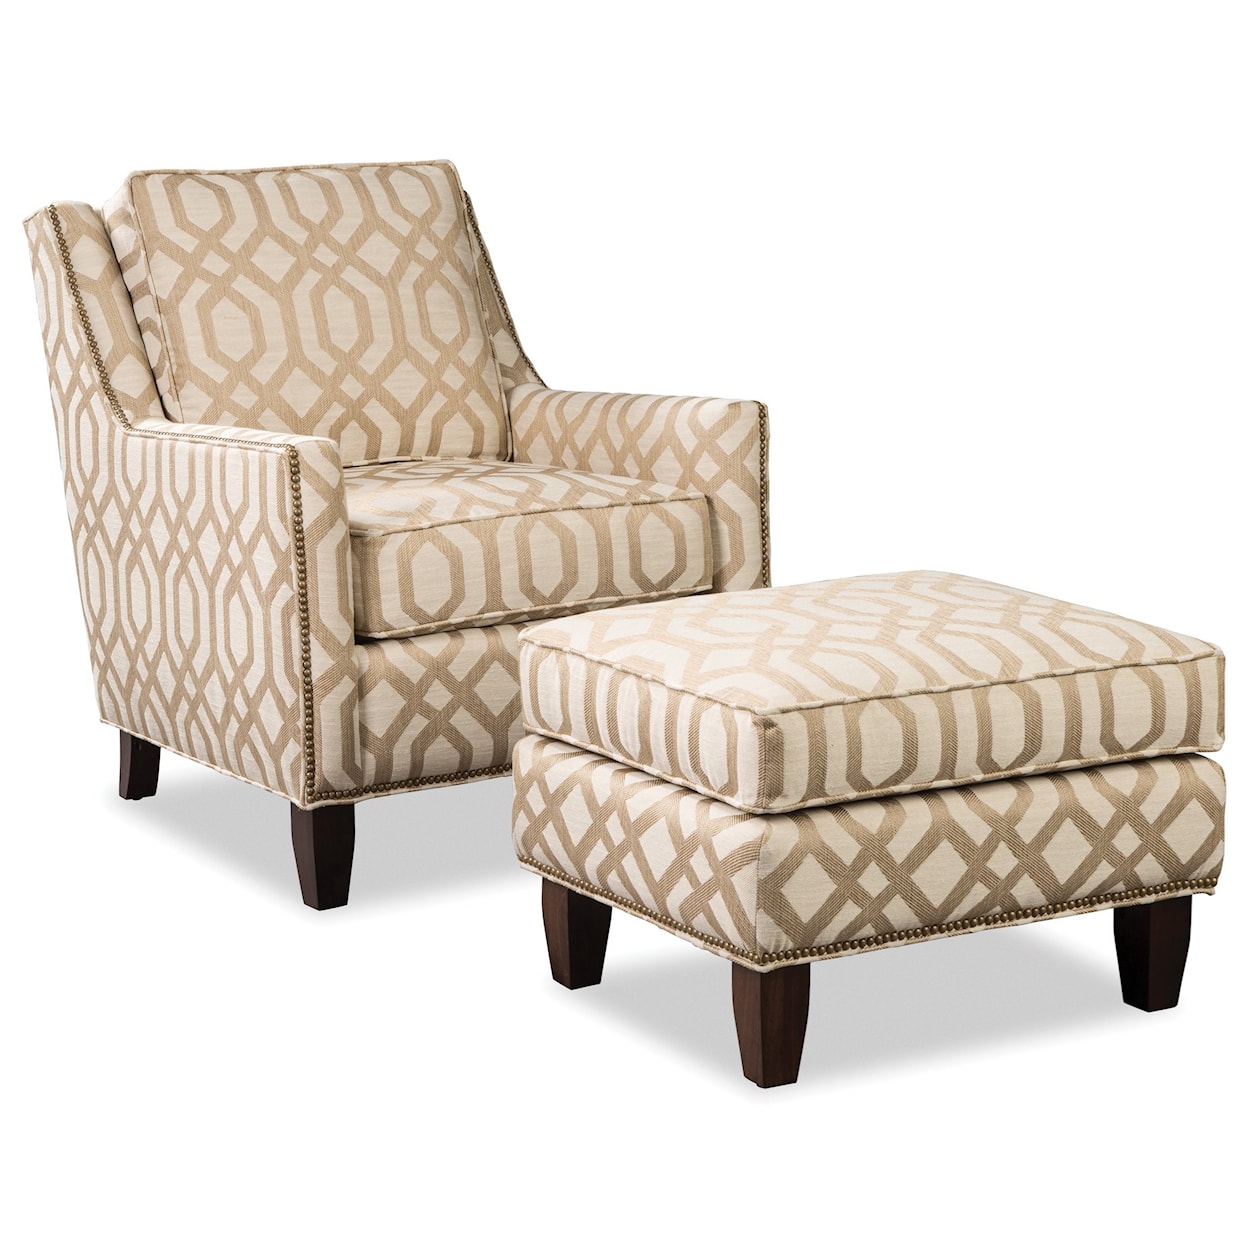 Craftmaster 090500 Chair & Ottoman Set